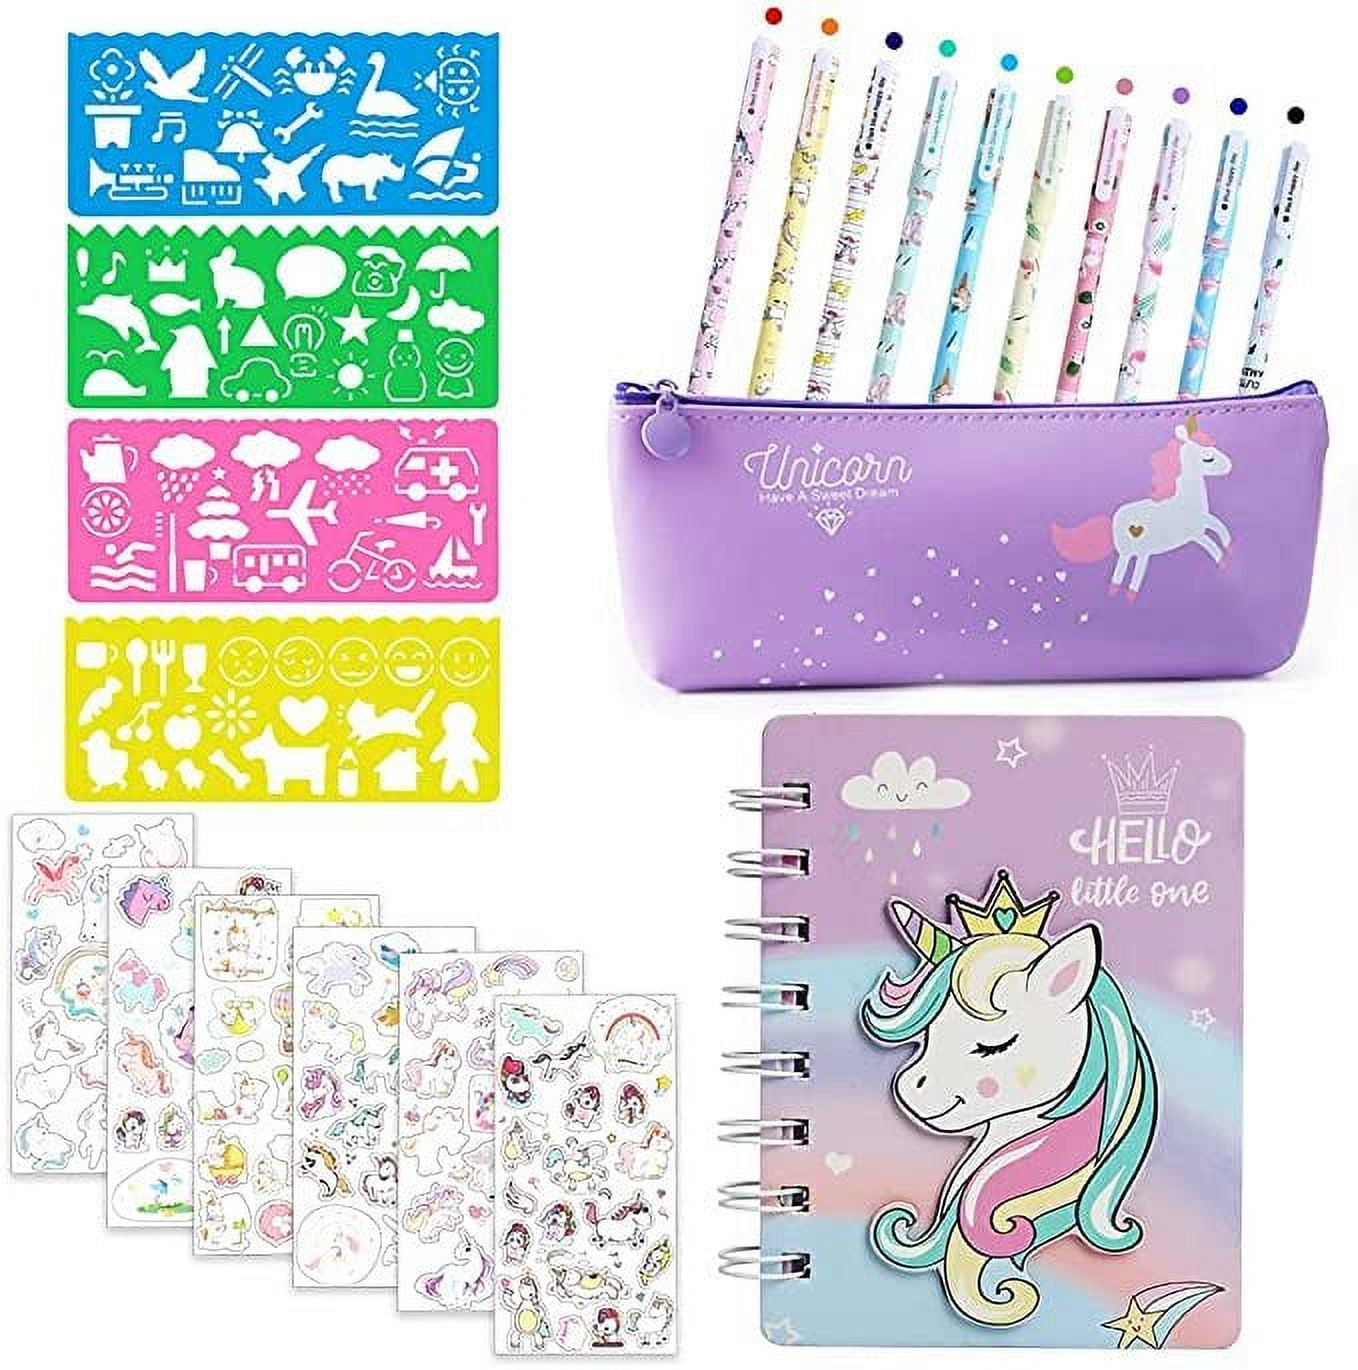 Buy Unicorn Stationary Gift Set for Girls, Unicorn School Supplies